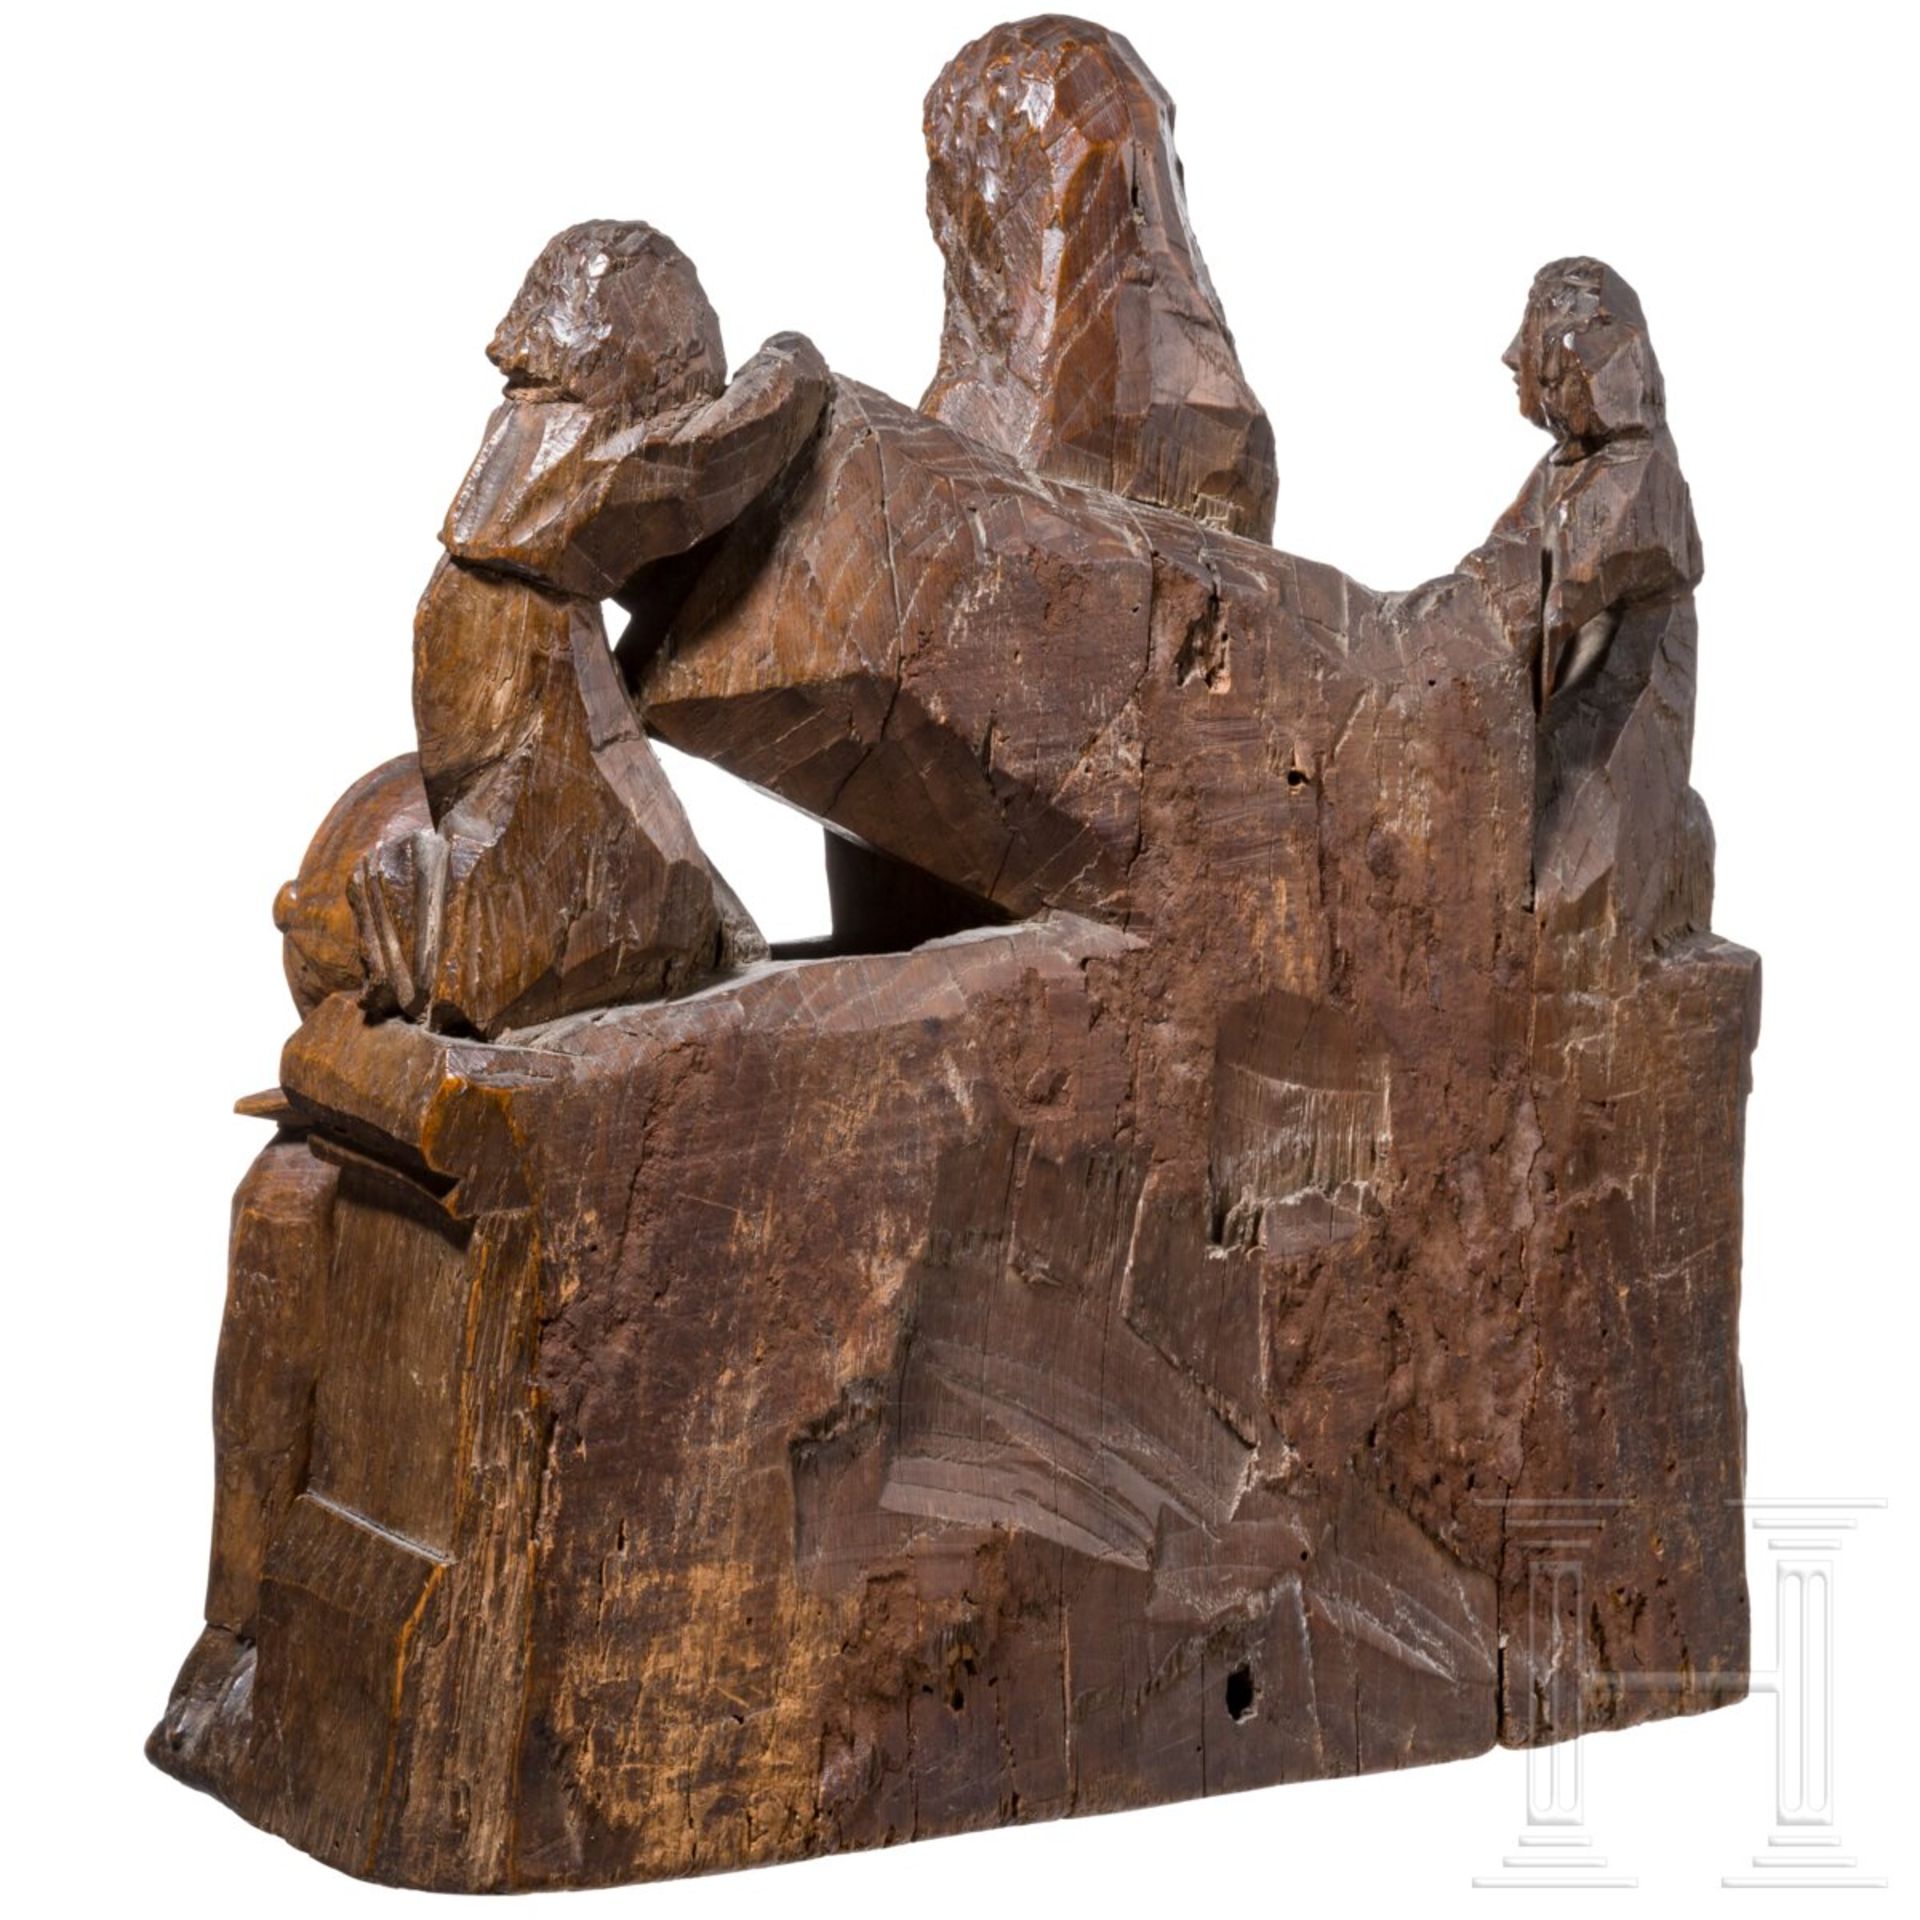 Retabelgruppe mit der Auferstehung Christi, Tournai (Doornik), um 1500 - Image 2 of 4